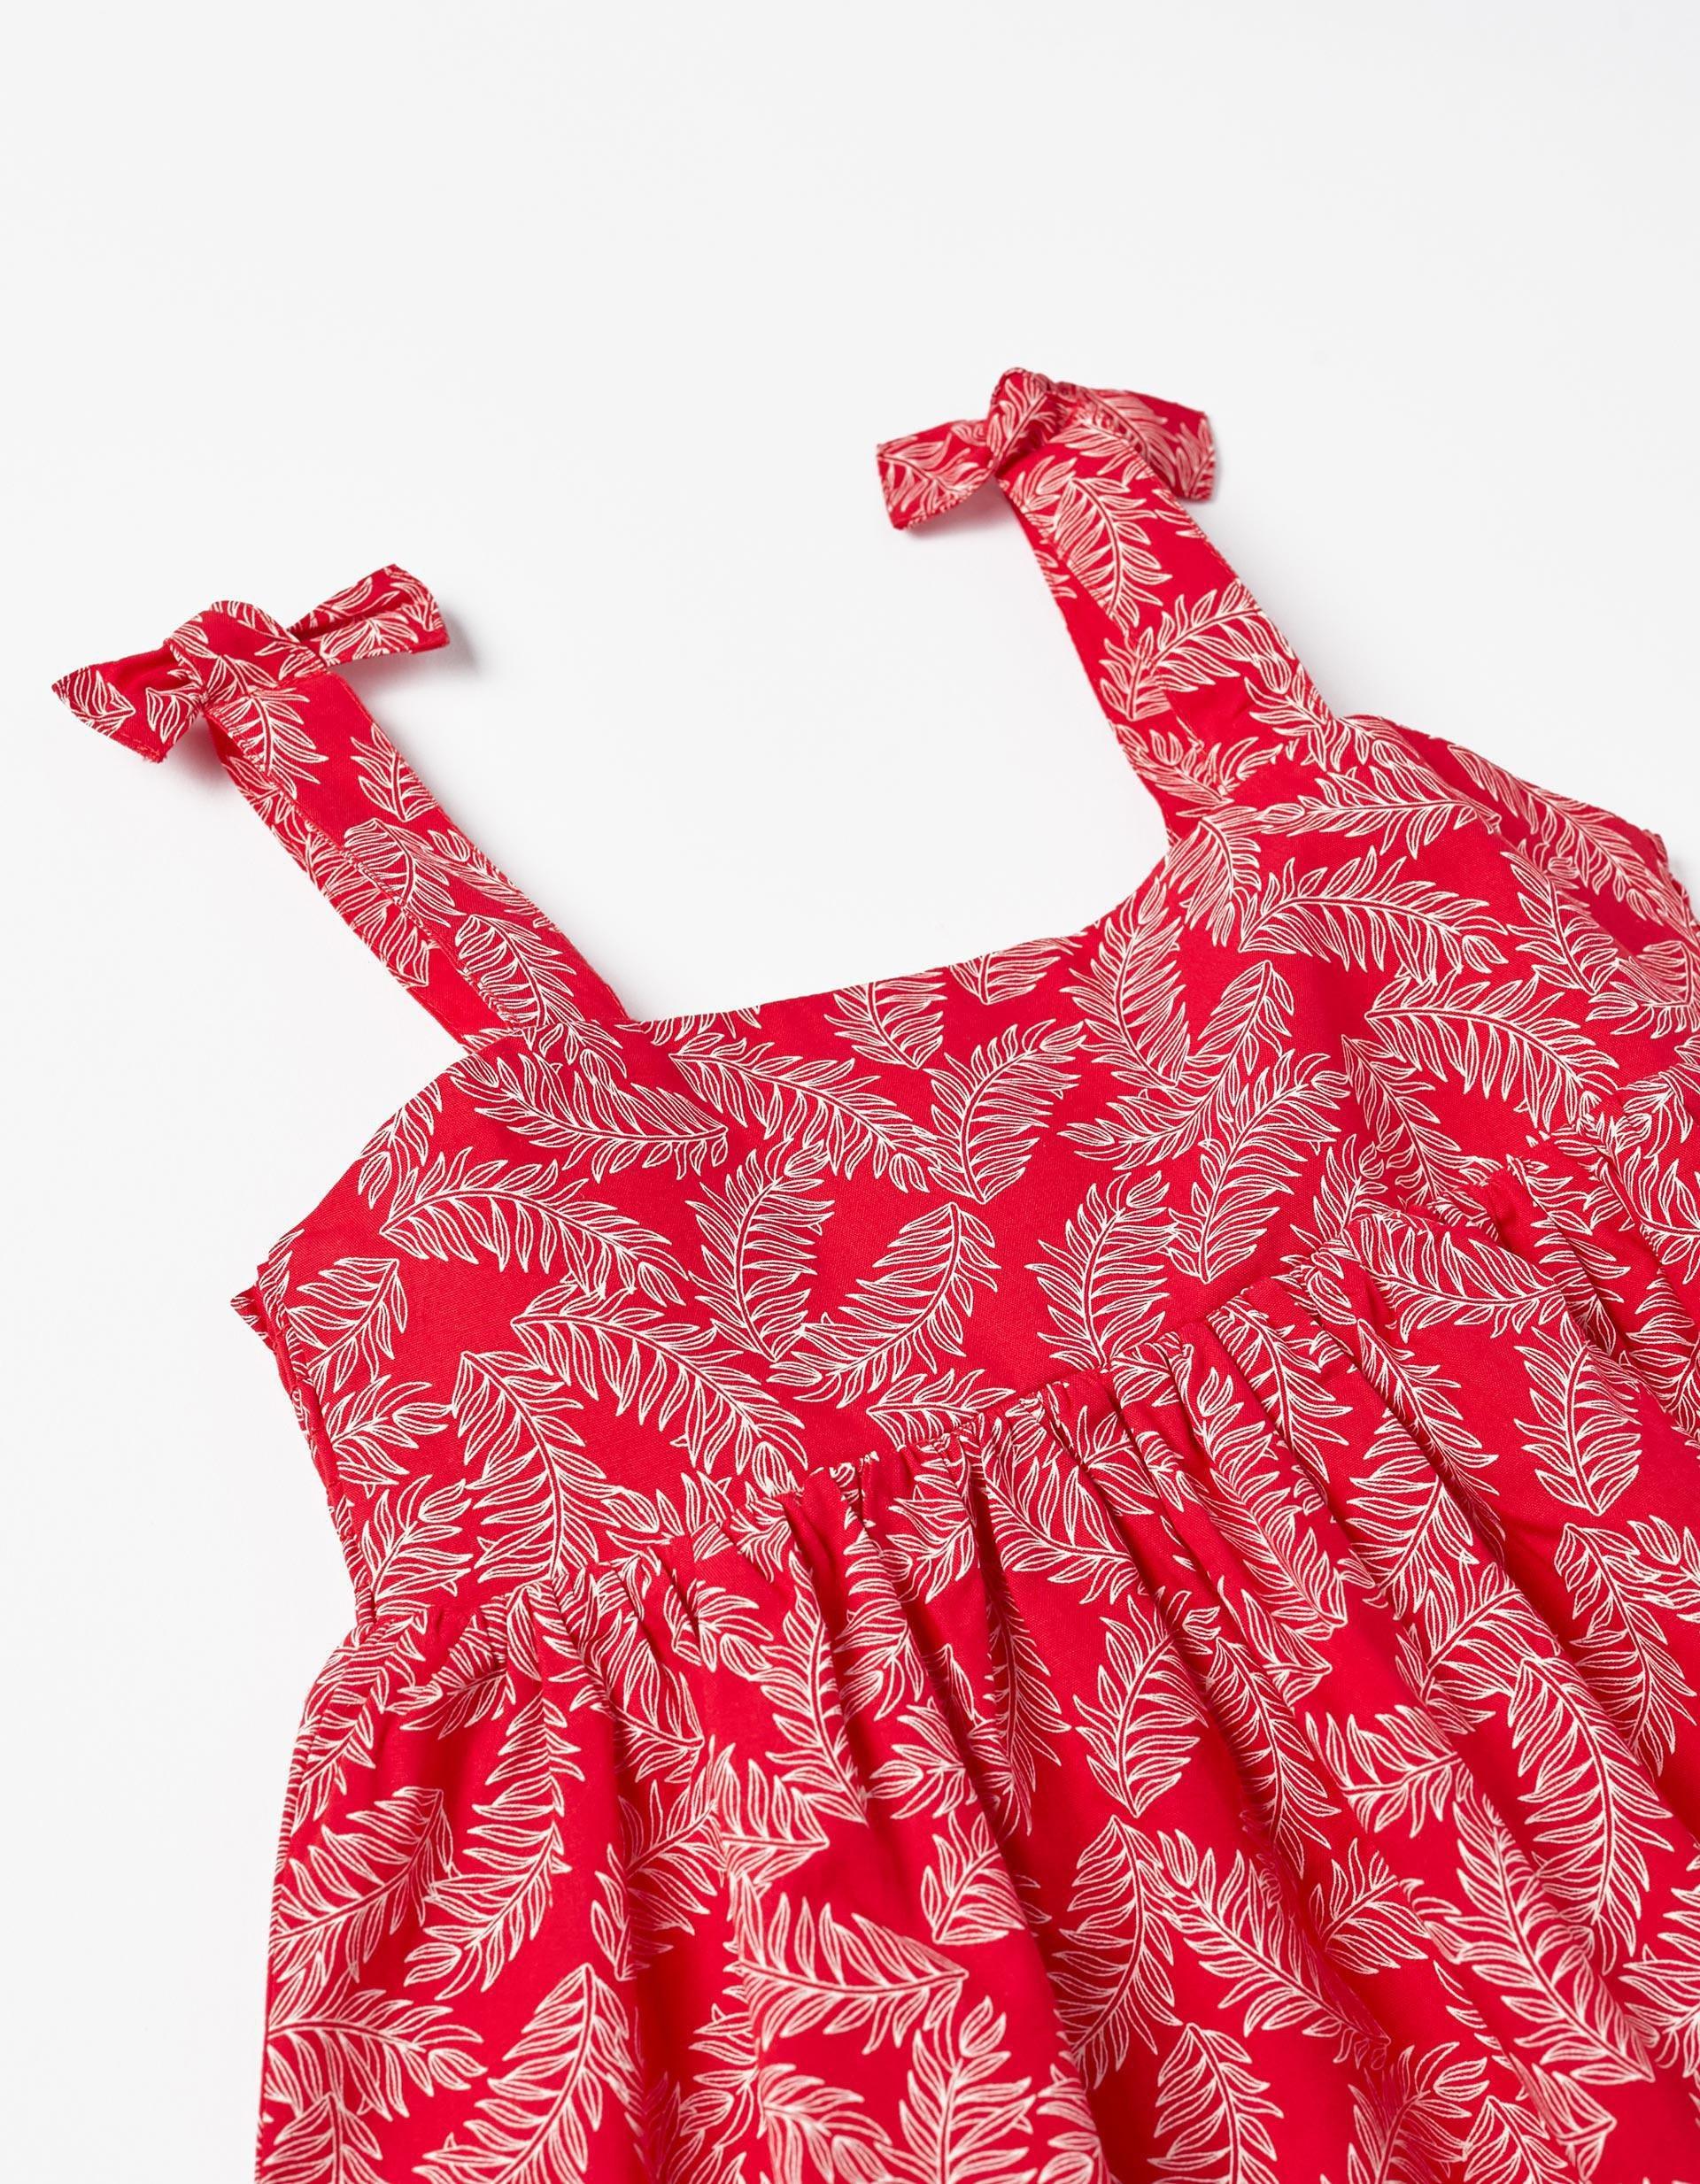 Zippy - Red Floral Patterned Dress, Kids Girls